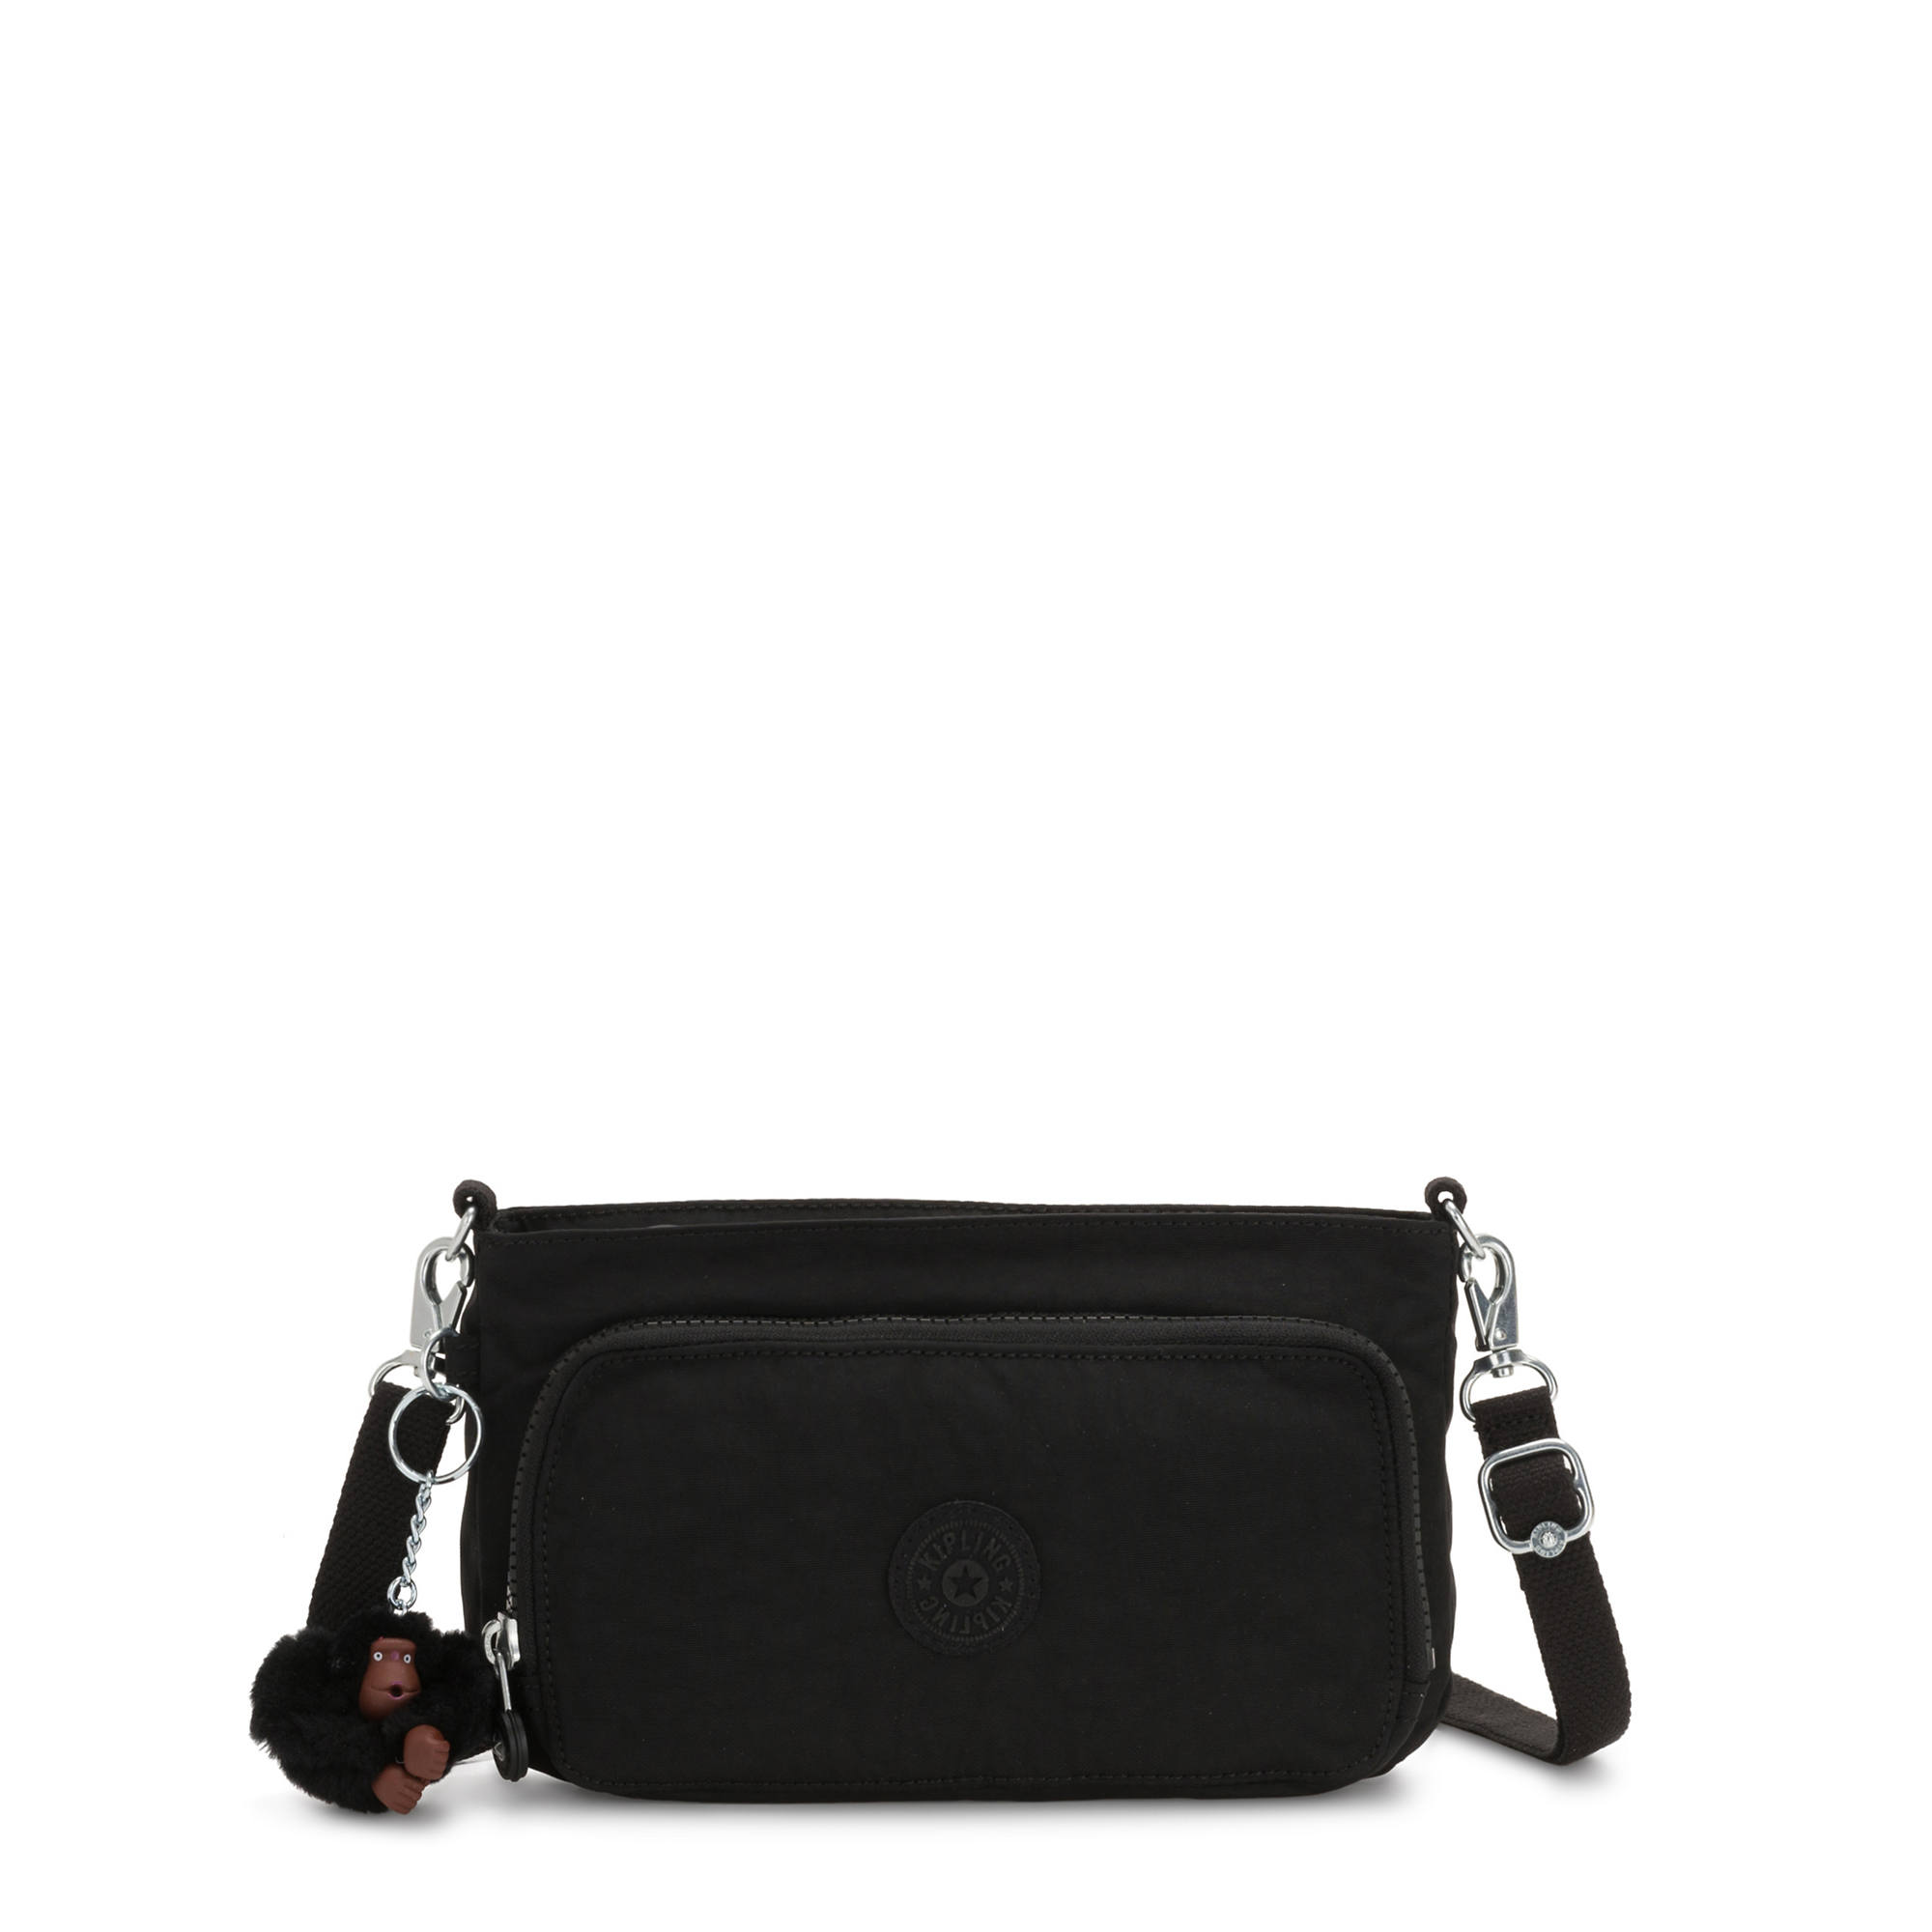 Kipling Myrte Convertible Bag True Black | eBay